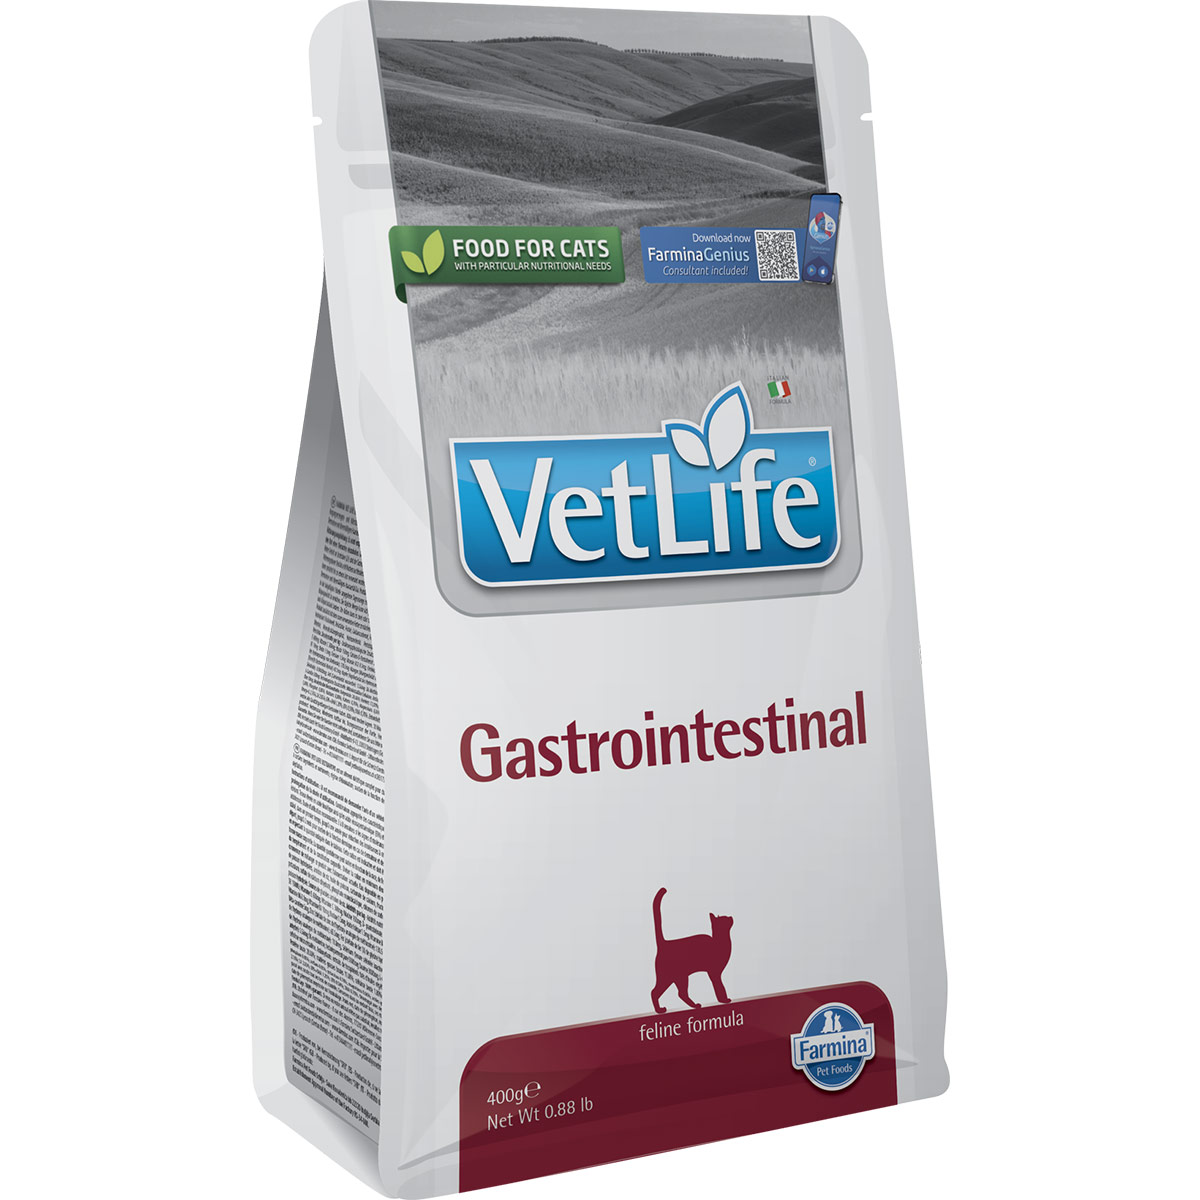 Farmina Vet Life Cat Gastrointestinal